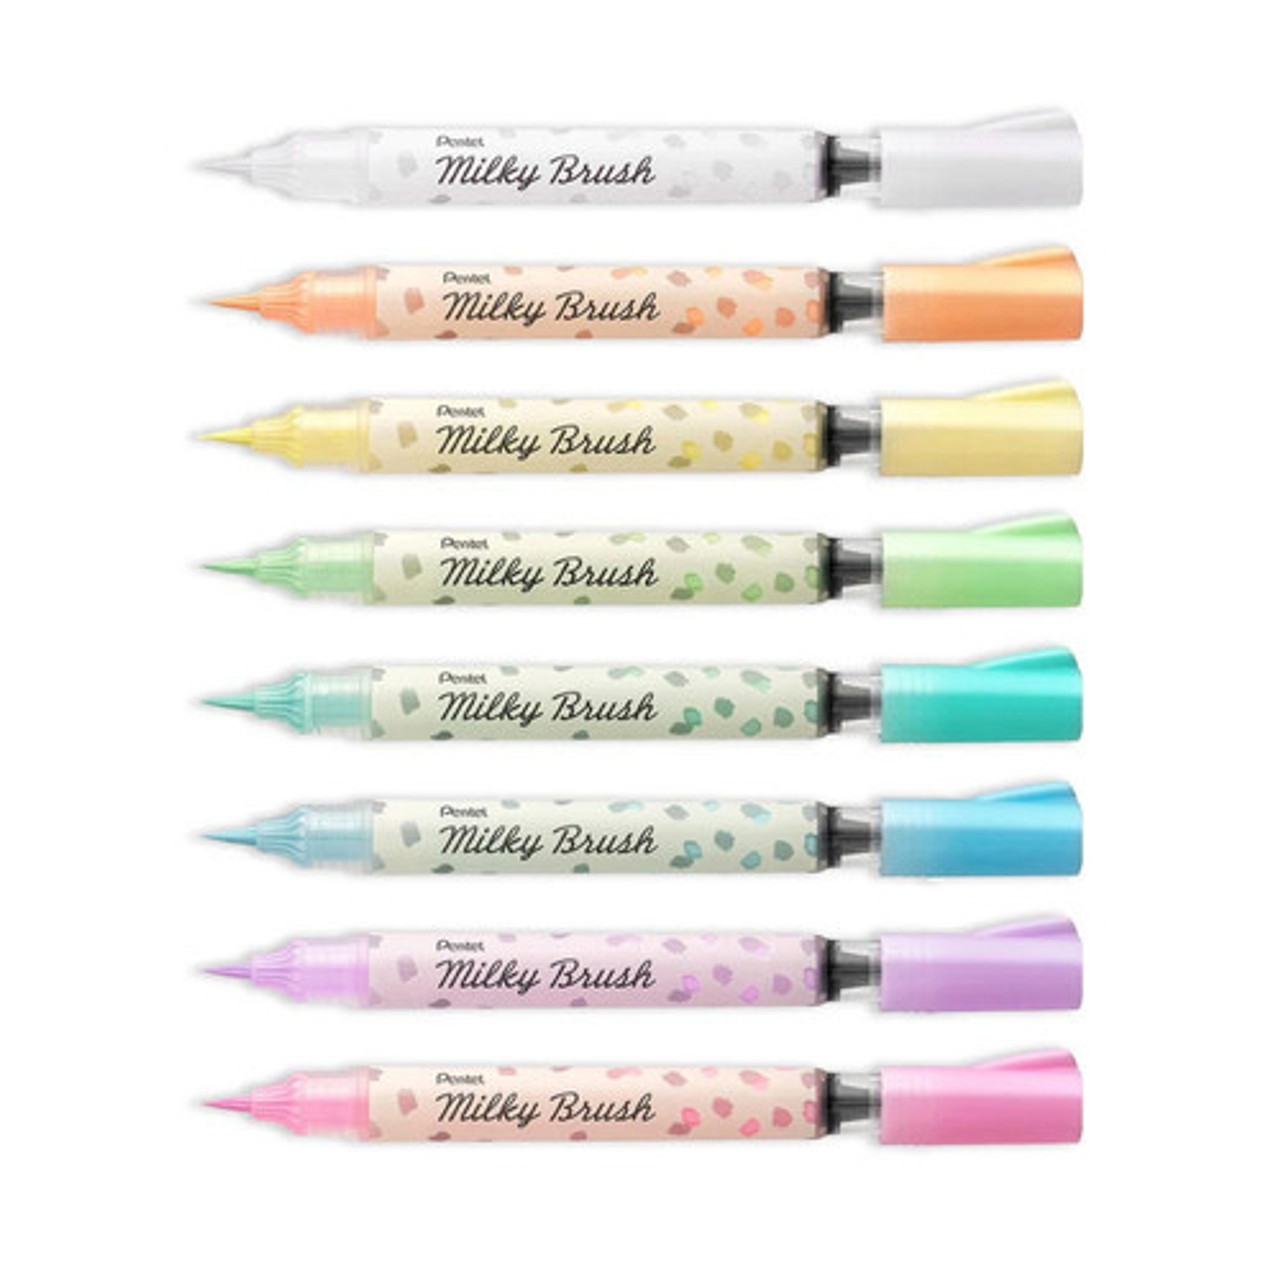 Pentel Color Brush Pen, Pentel Ink Brush Pen, Brushes Dry Paint